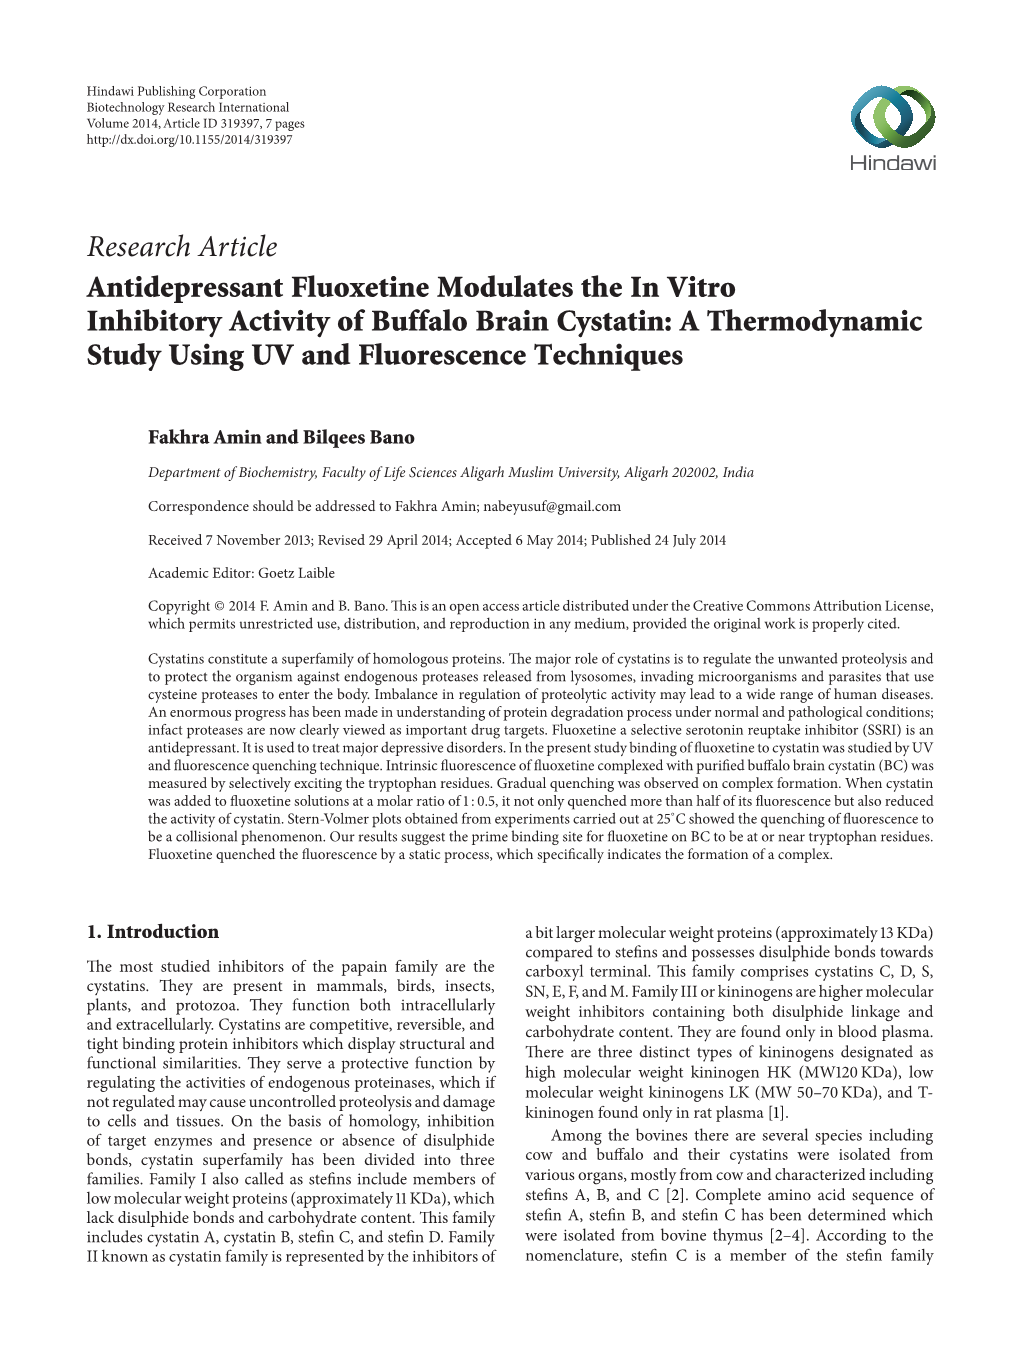 Antidepressant Fluoxetine Modulates the in Vitro Inhibitory Activity of Buffalo Brain Cystatin: a Thermodynamic Study Using UV and Fluorescence Techniques